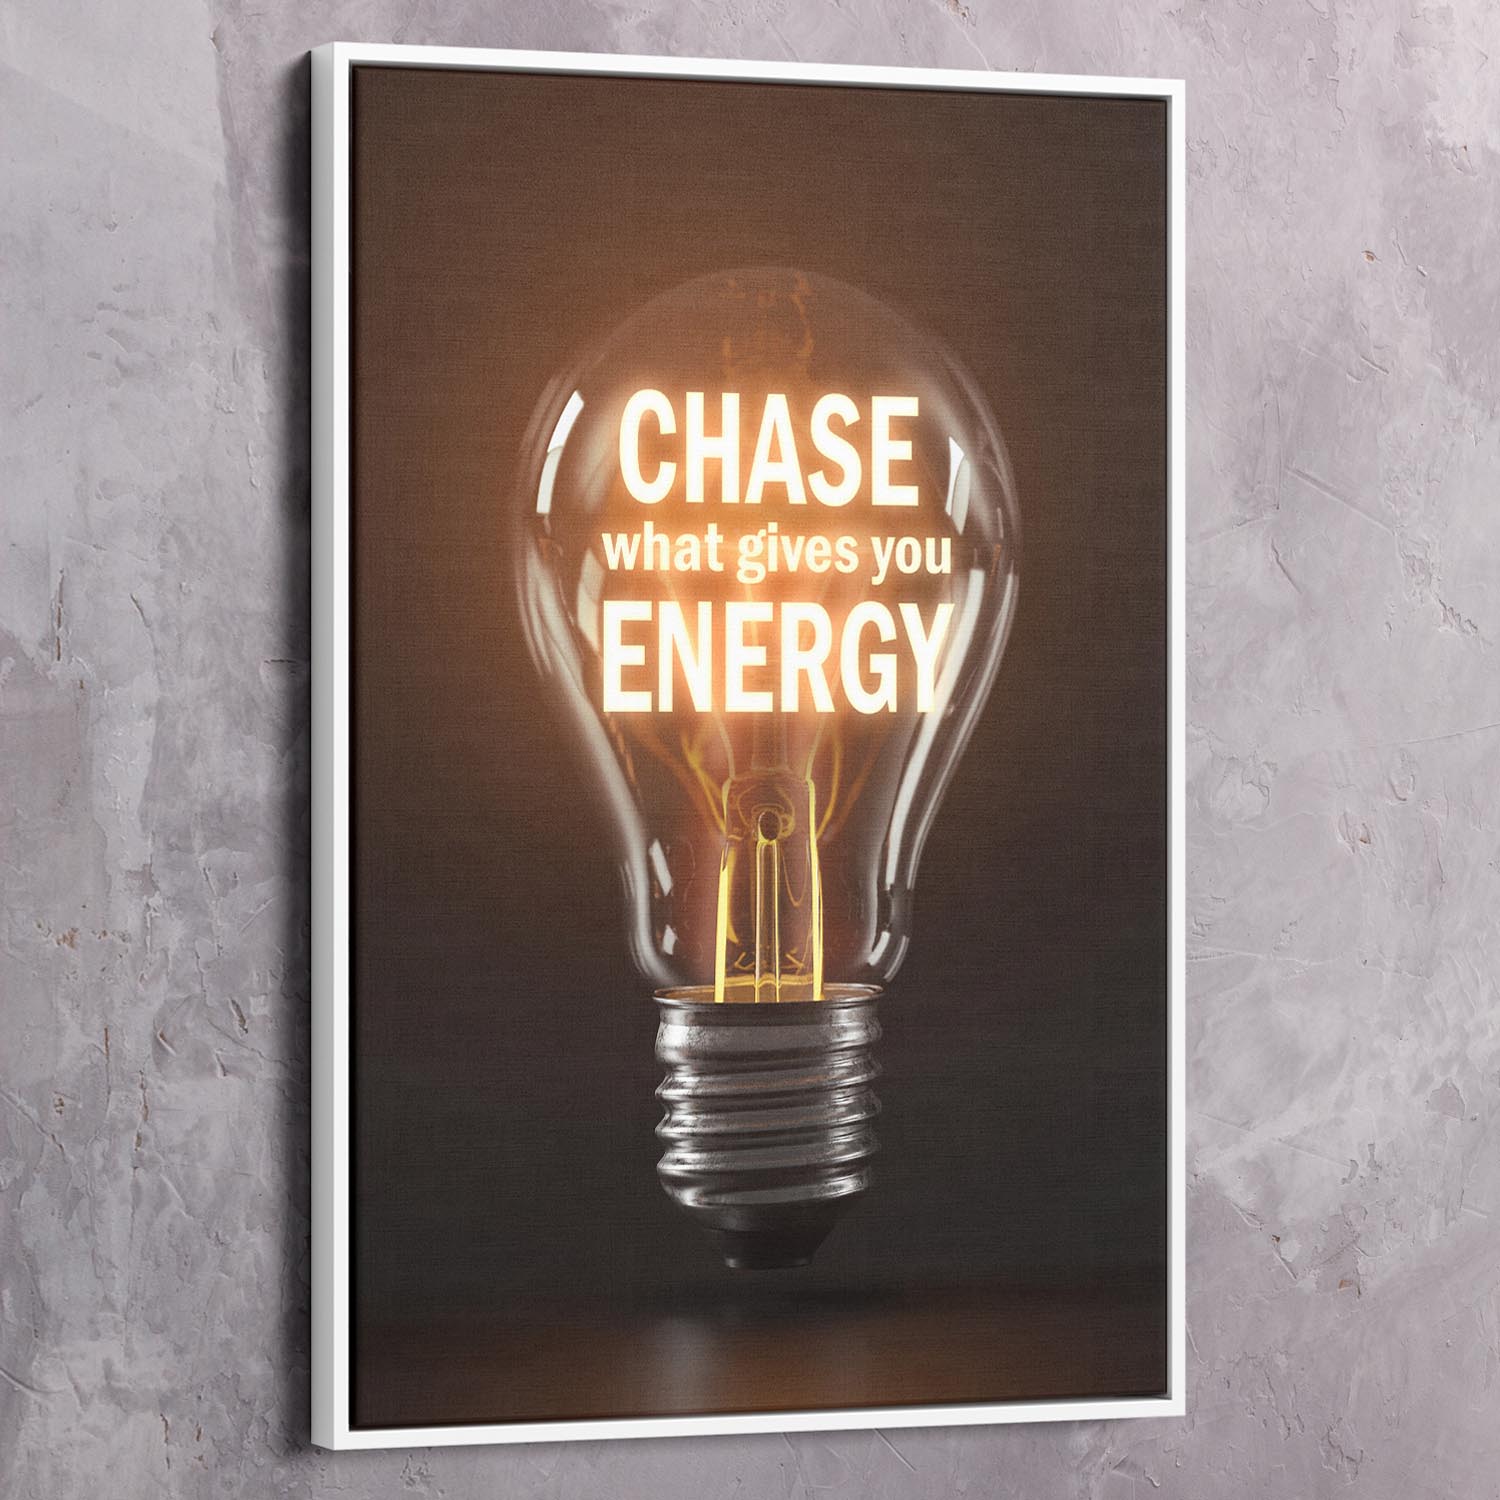 Chase Energy Wall Art | Inspirational Wall Art Motivational Wall Art Quotes Office Art | ImpaktMaker Exclusive Canvas Art Portrait